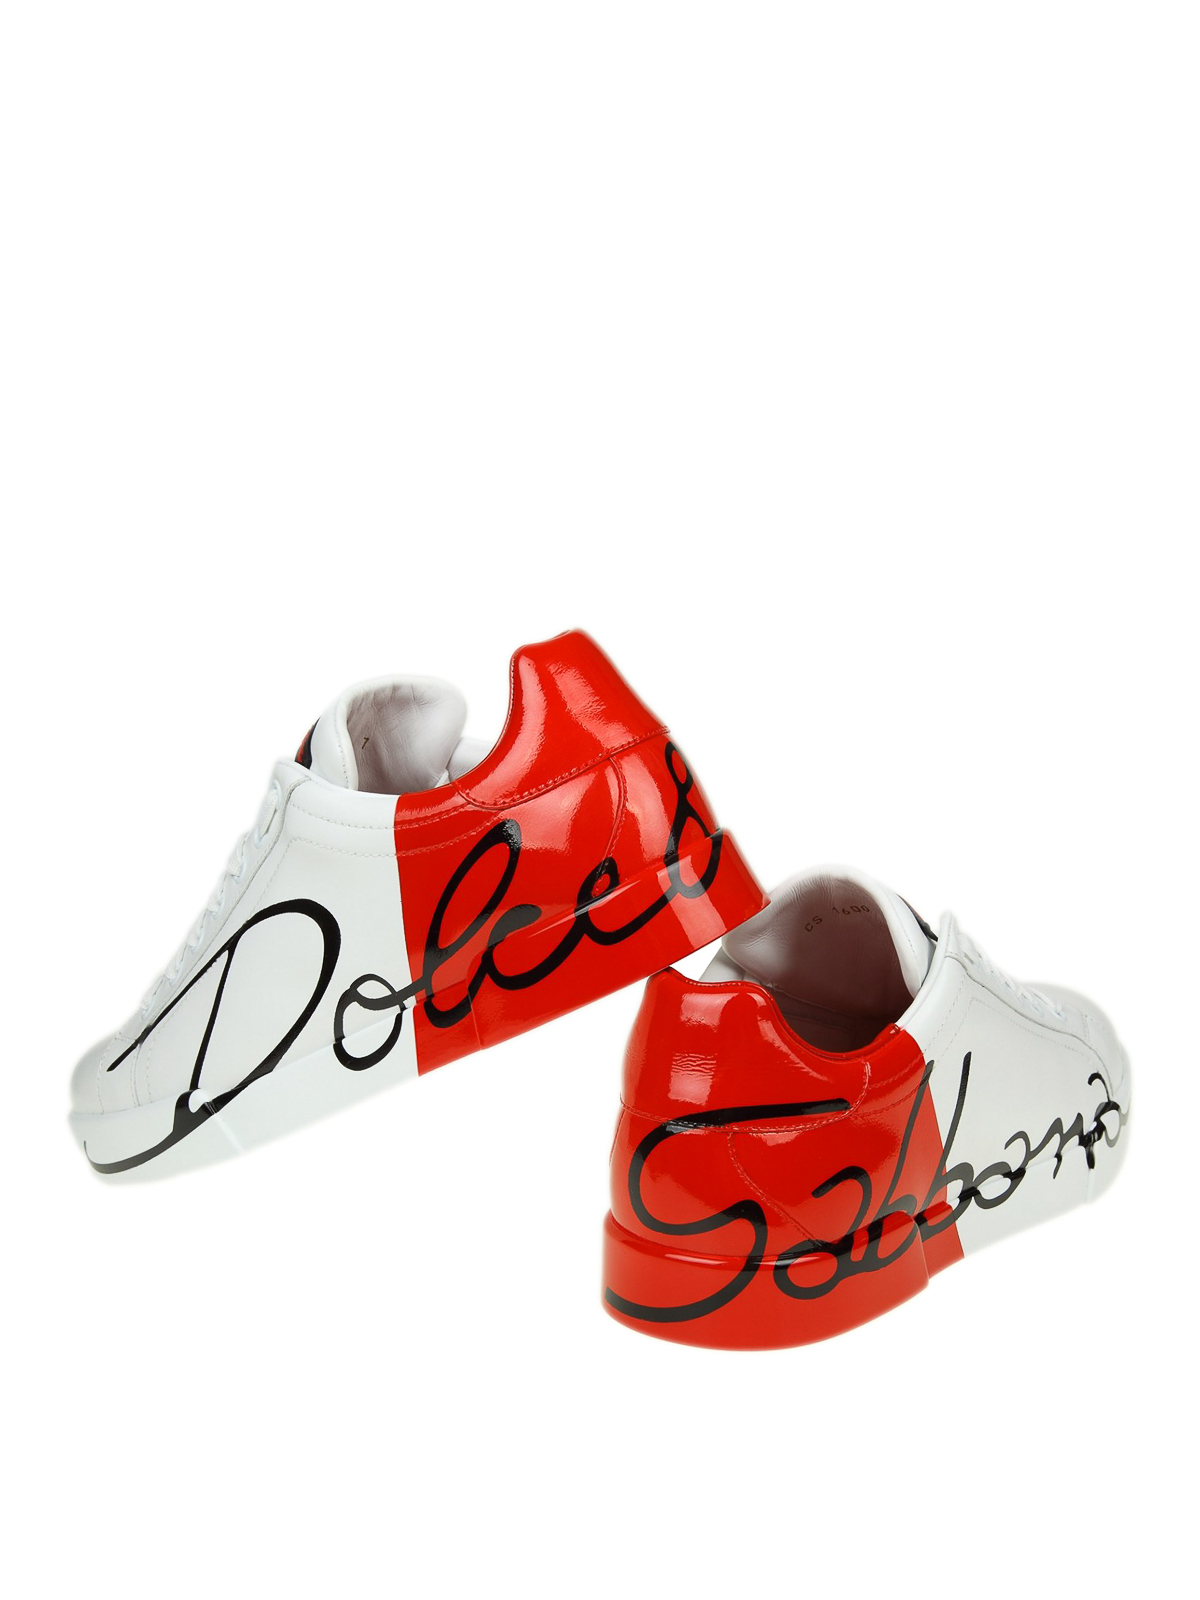 Trainers Dolce & Gabbana - Portofino white and red leather 